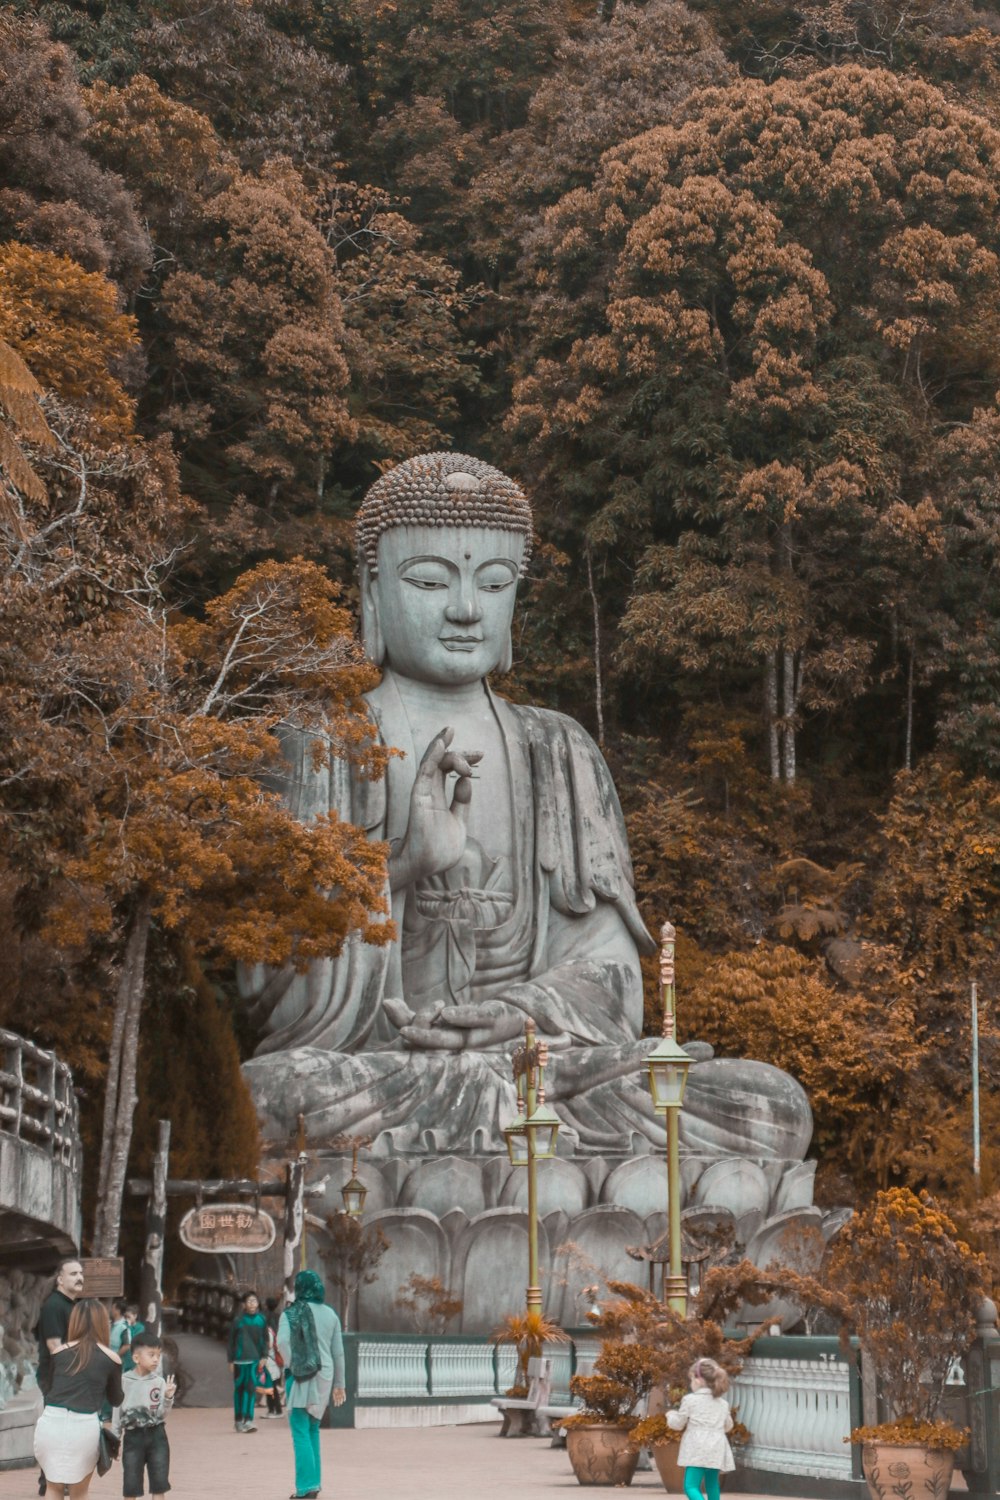 people walking near buddha statue near trees at daytime